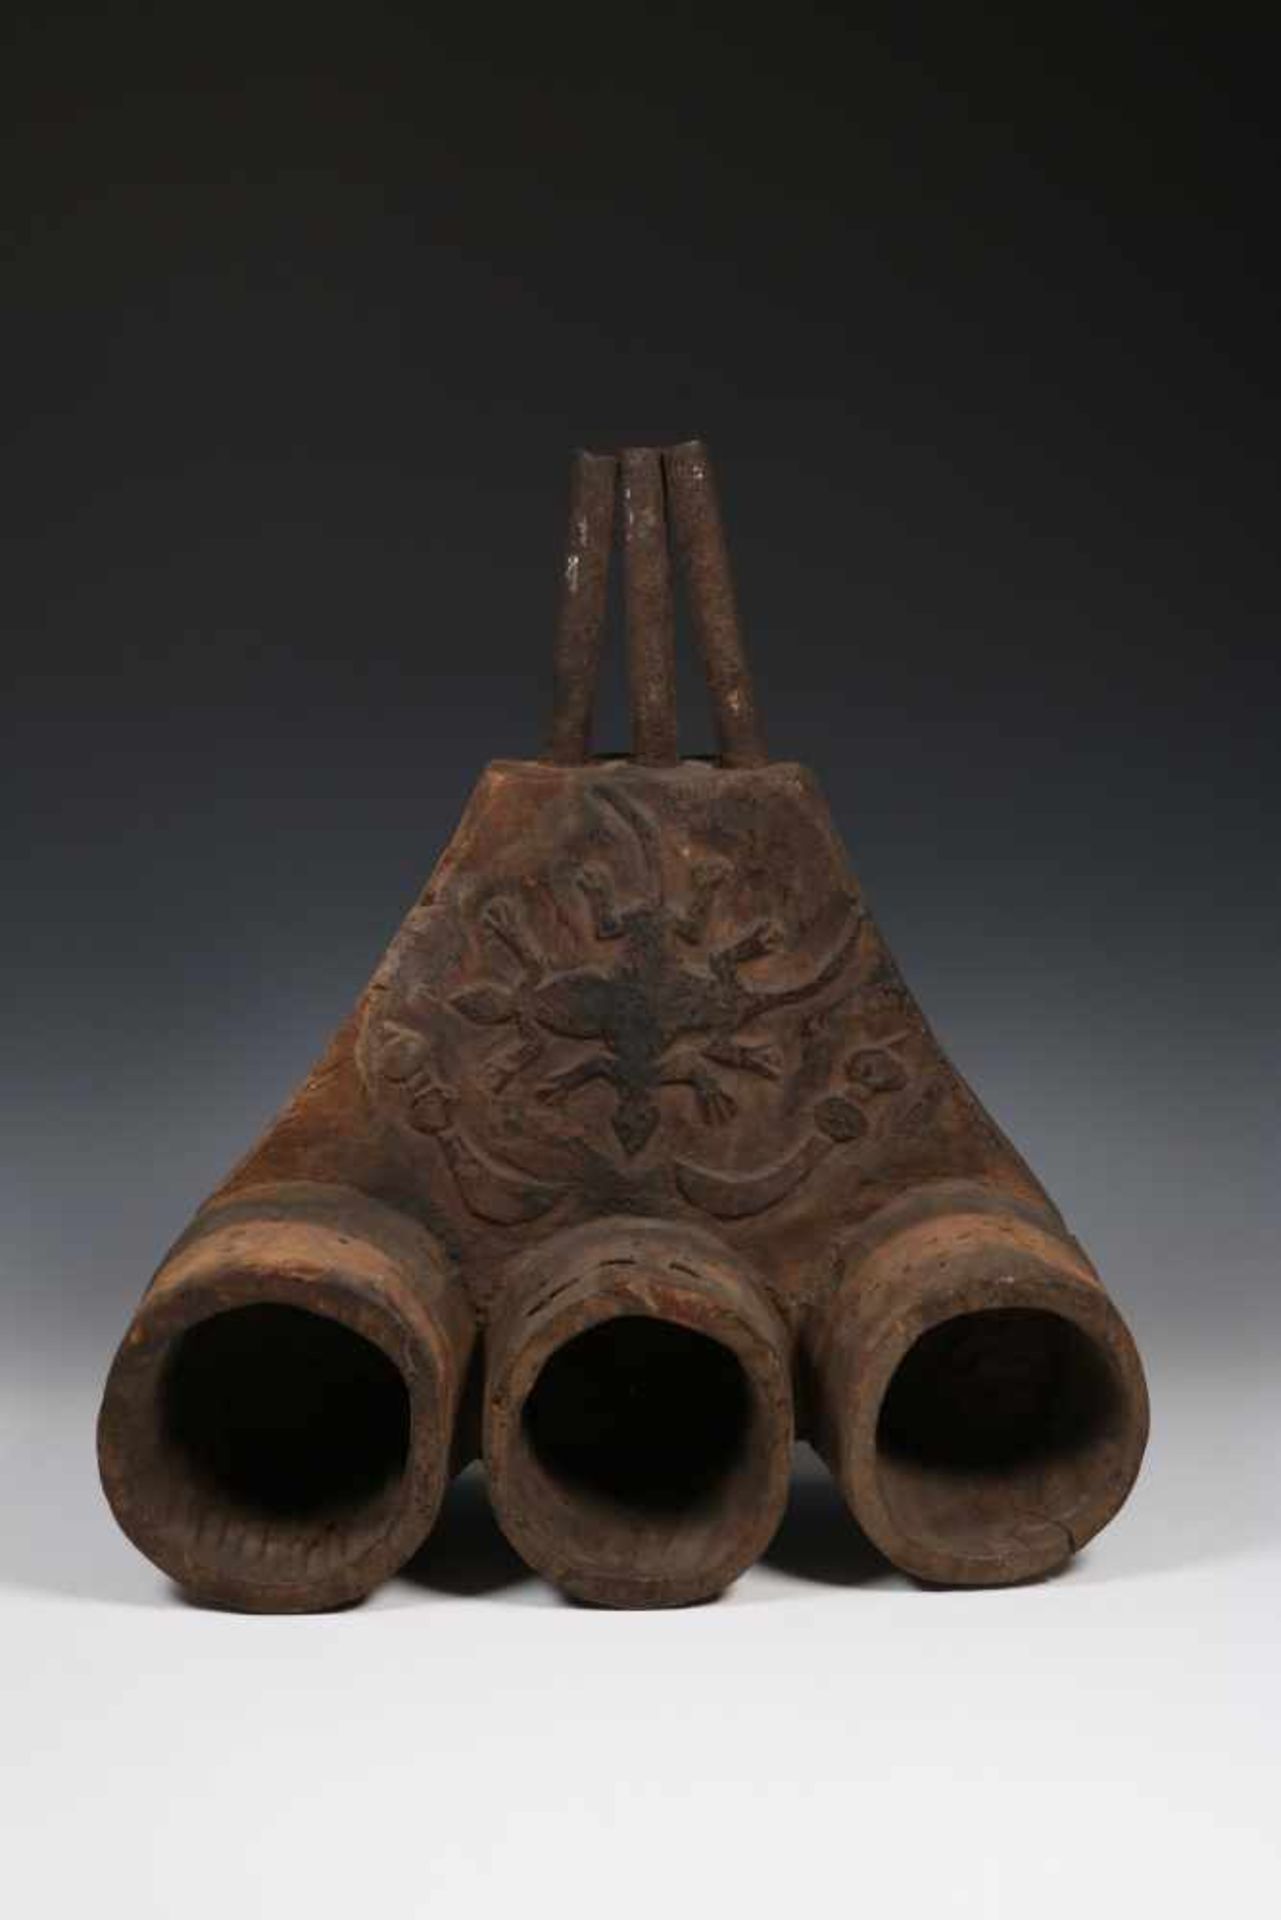 West Afrika, houten blaasbalgmet drie balgen en dierfiguren in reliëf, l. 45 en b. 44 cm. [1]120 - Image 2 of 2